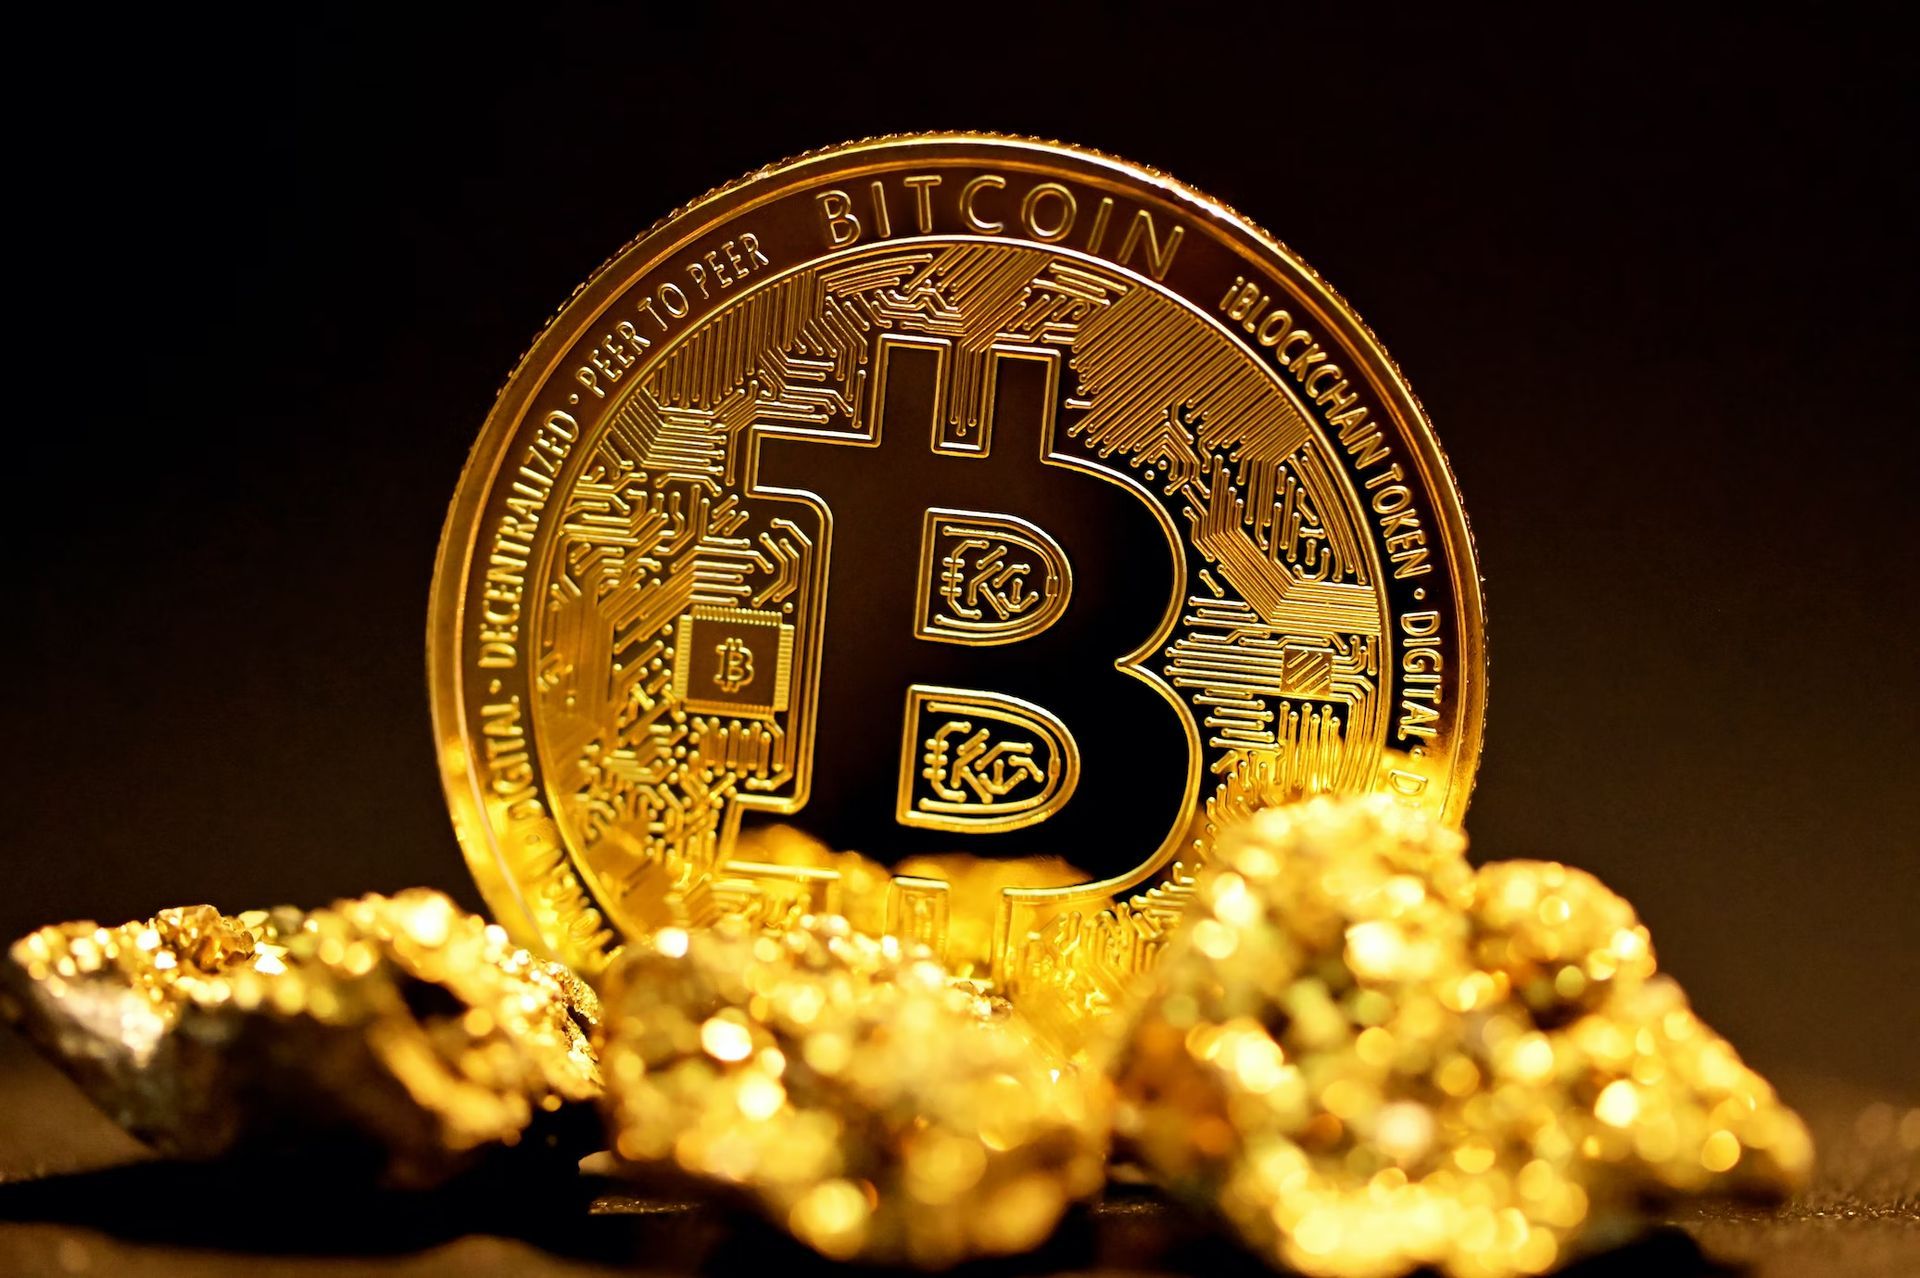 Bitcoin surpasses $30,000 amidst investor optimism